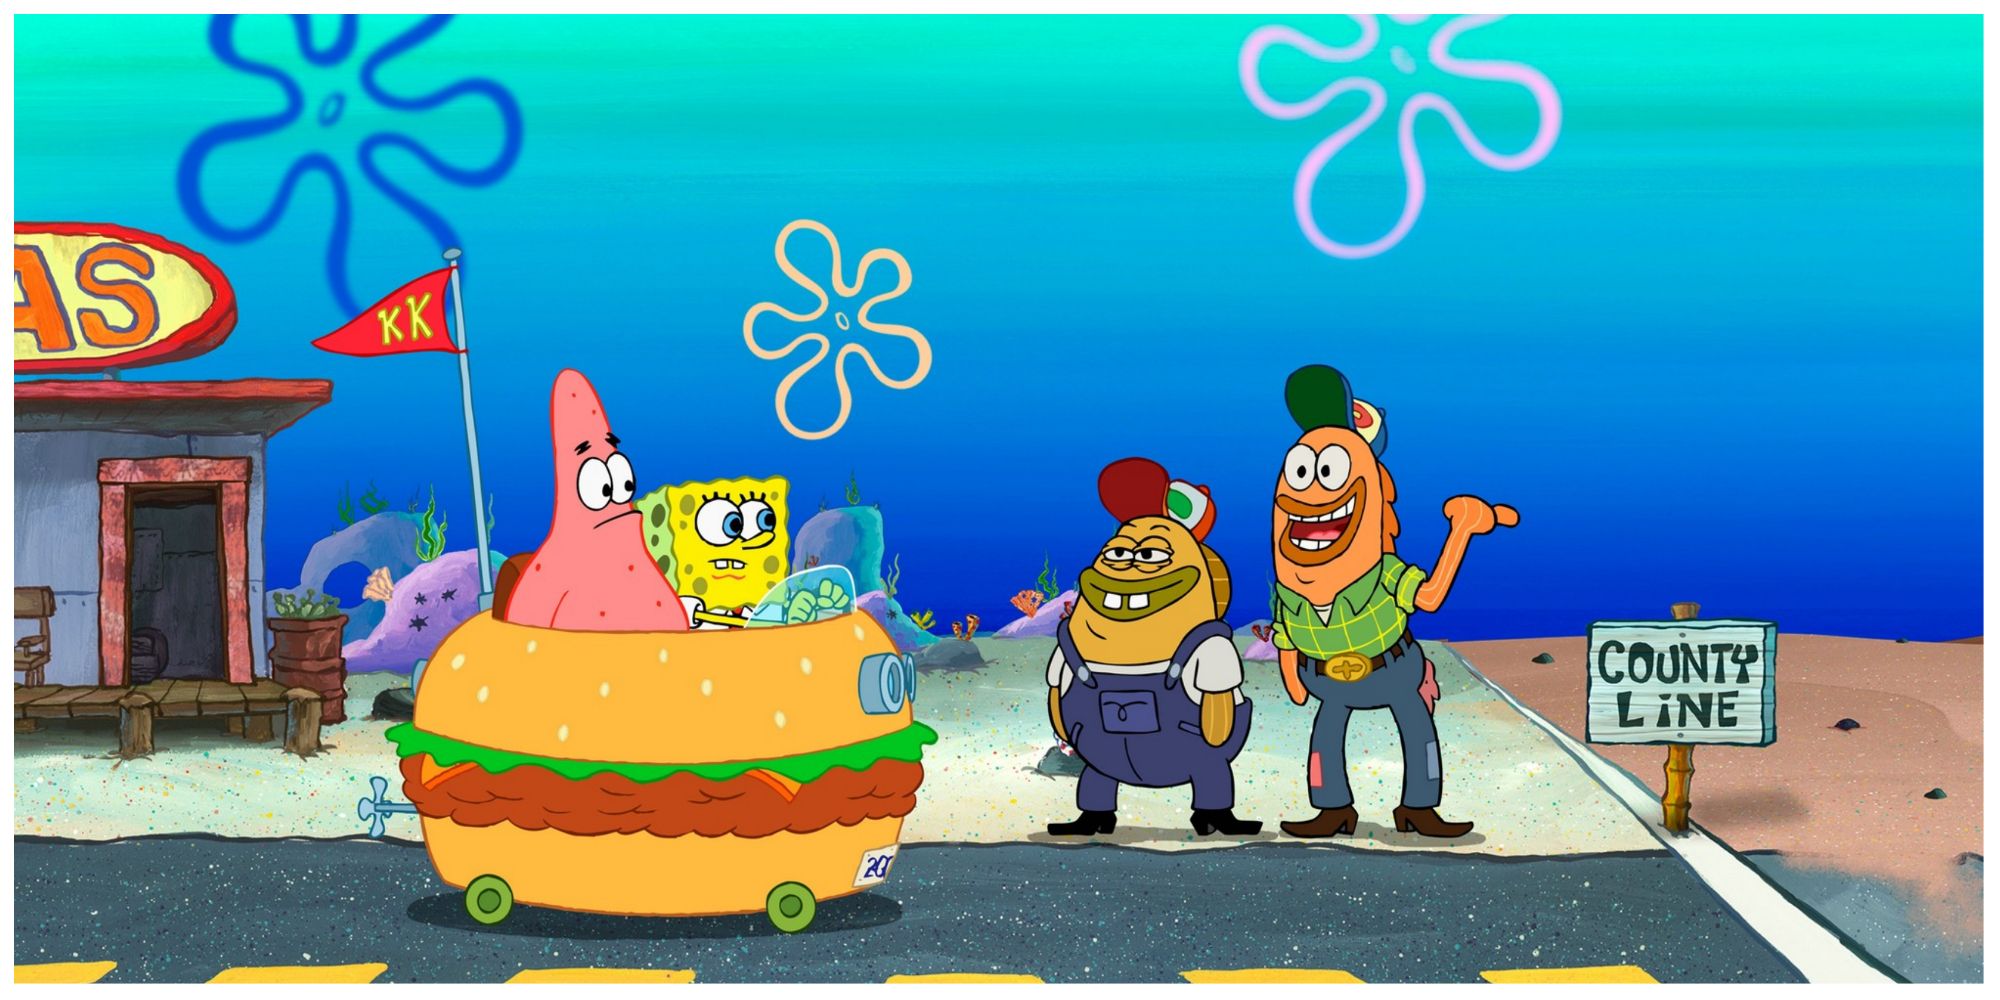 SpongeBob Squarepants and Patrick star in the Spongebob squarepants movie